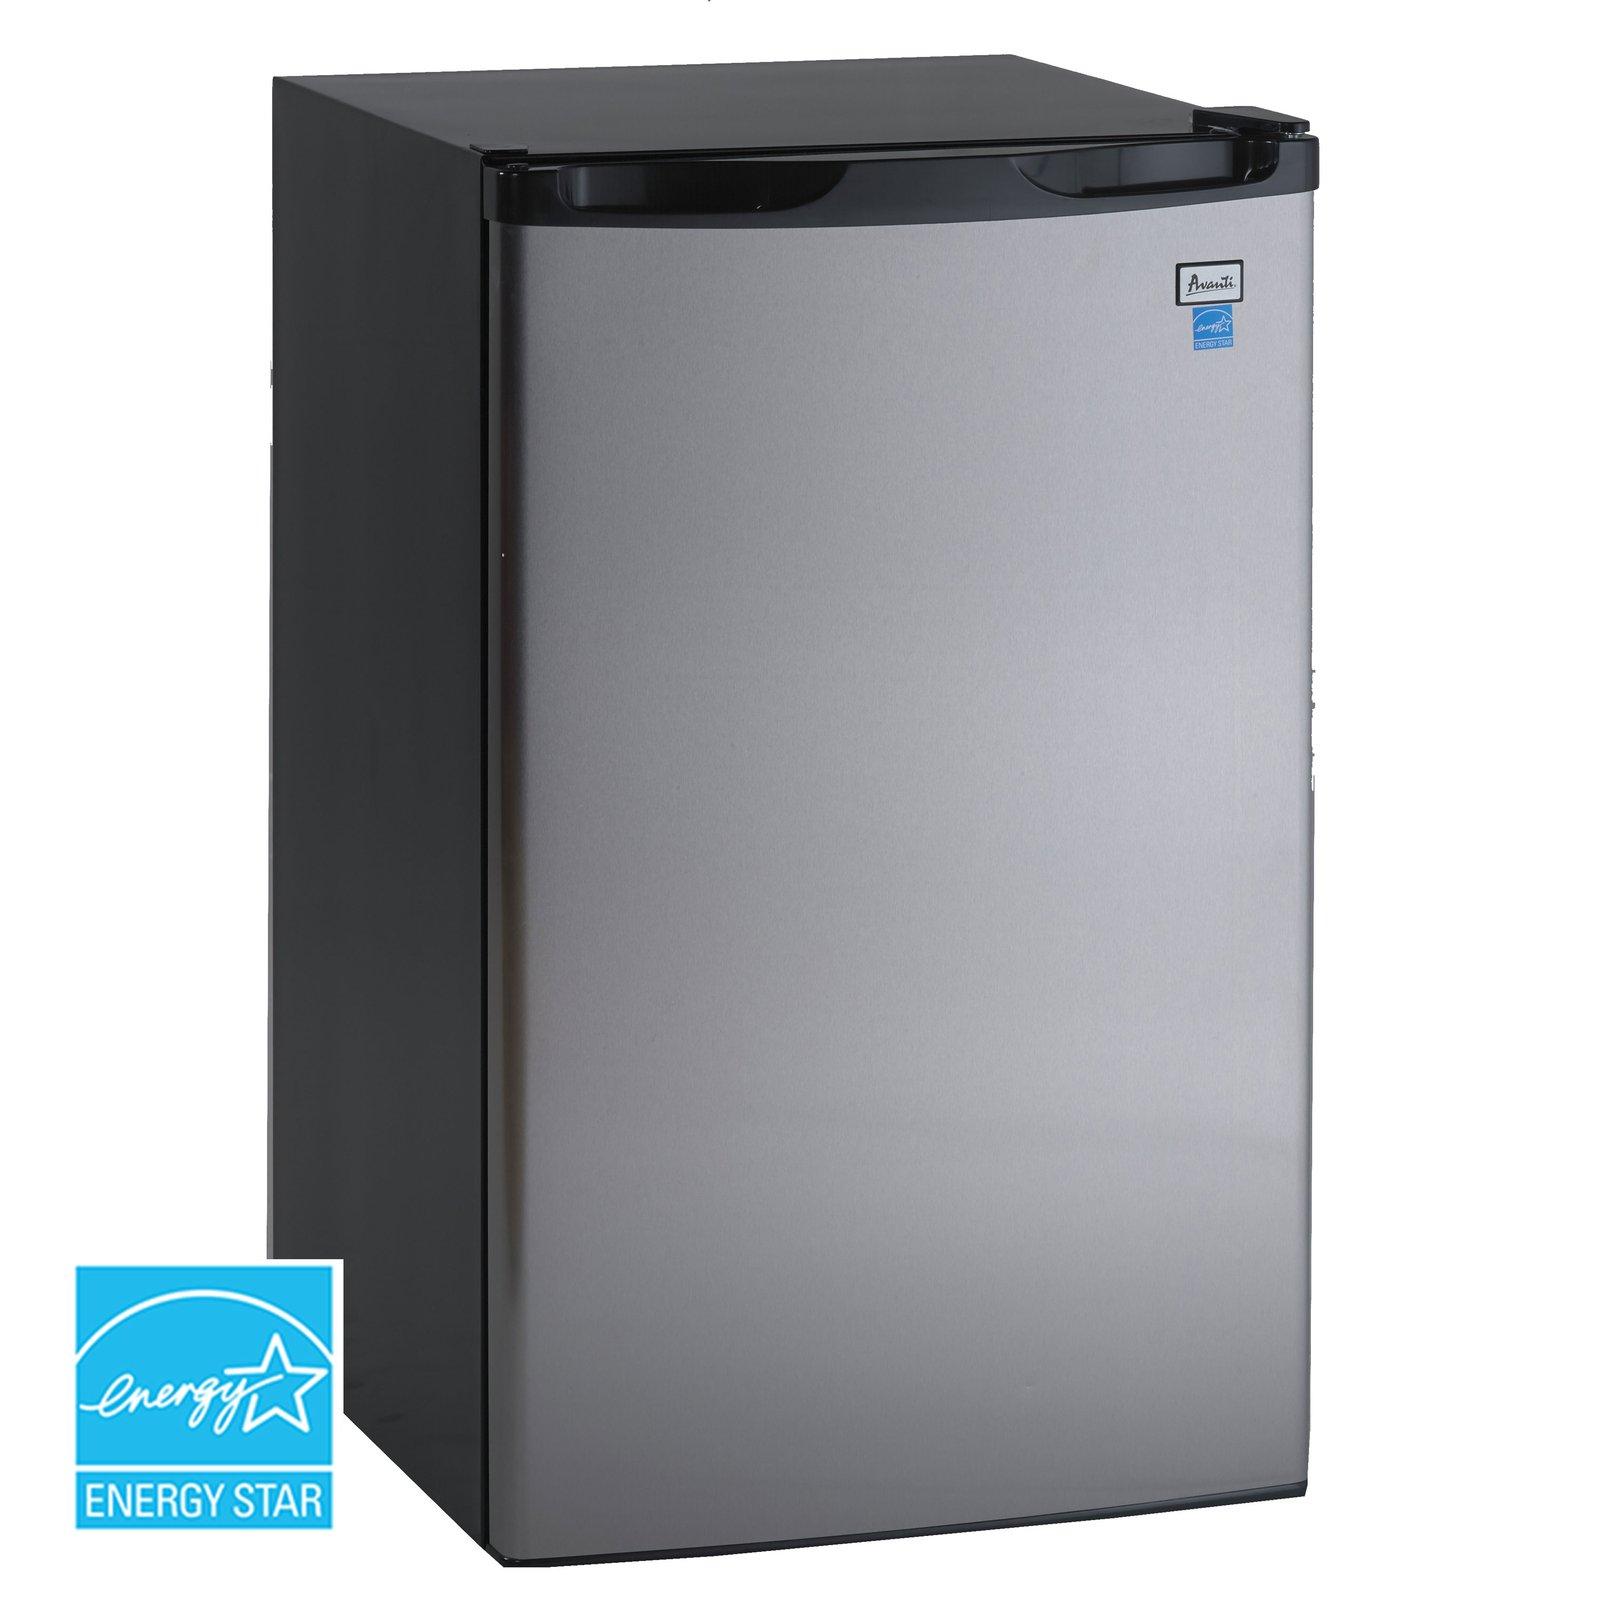 Avanti 4.4 cu. ft. Compact Refrigerator - Stainless Steel / 4.4 cu. ft.